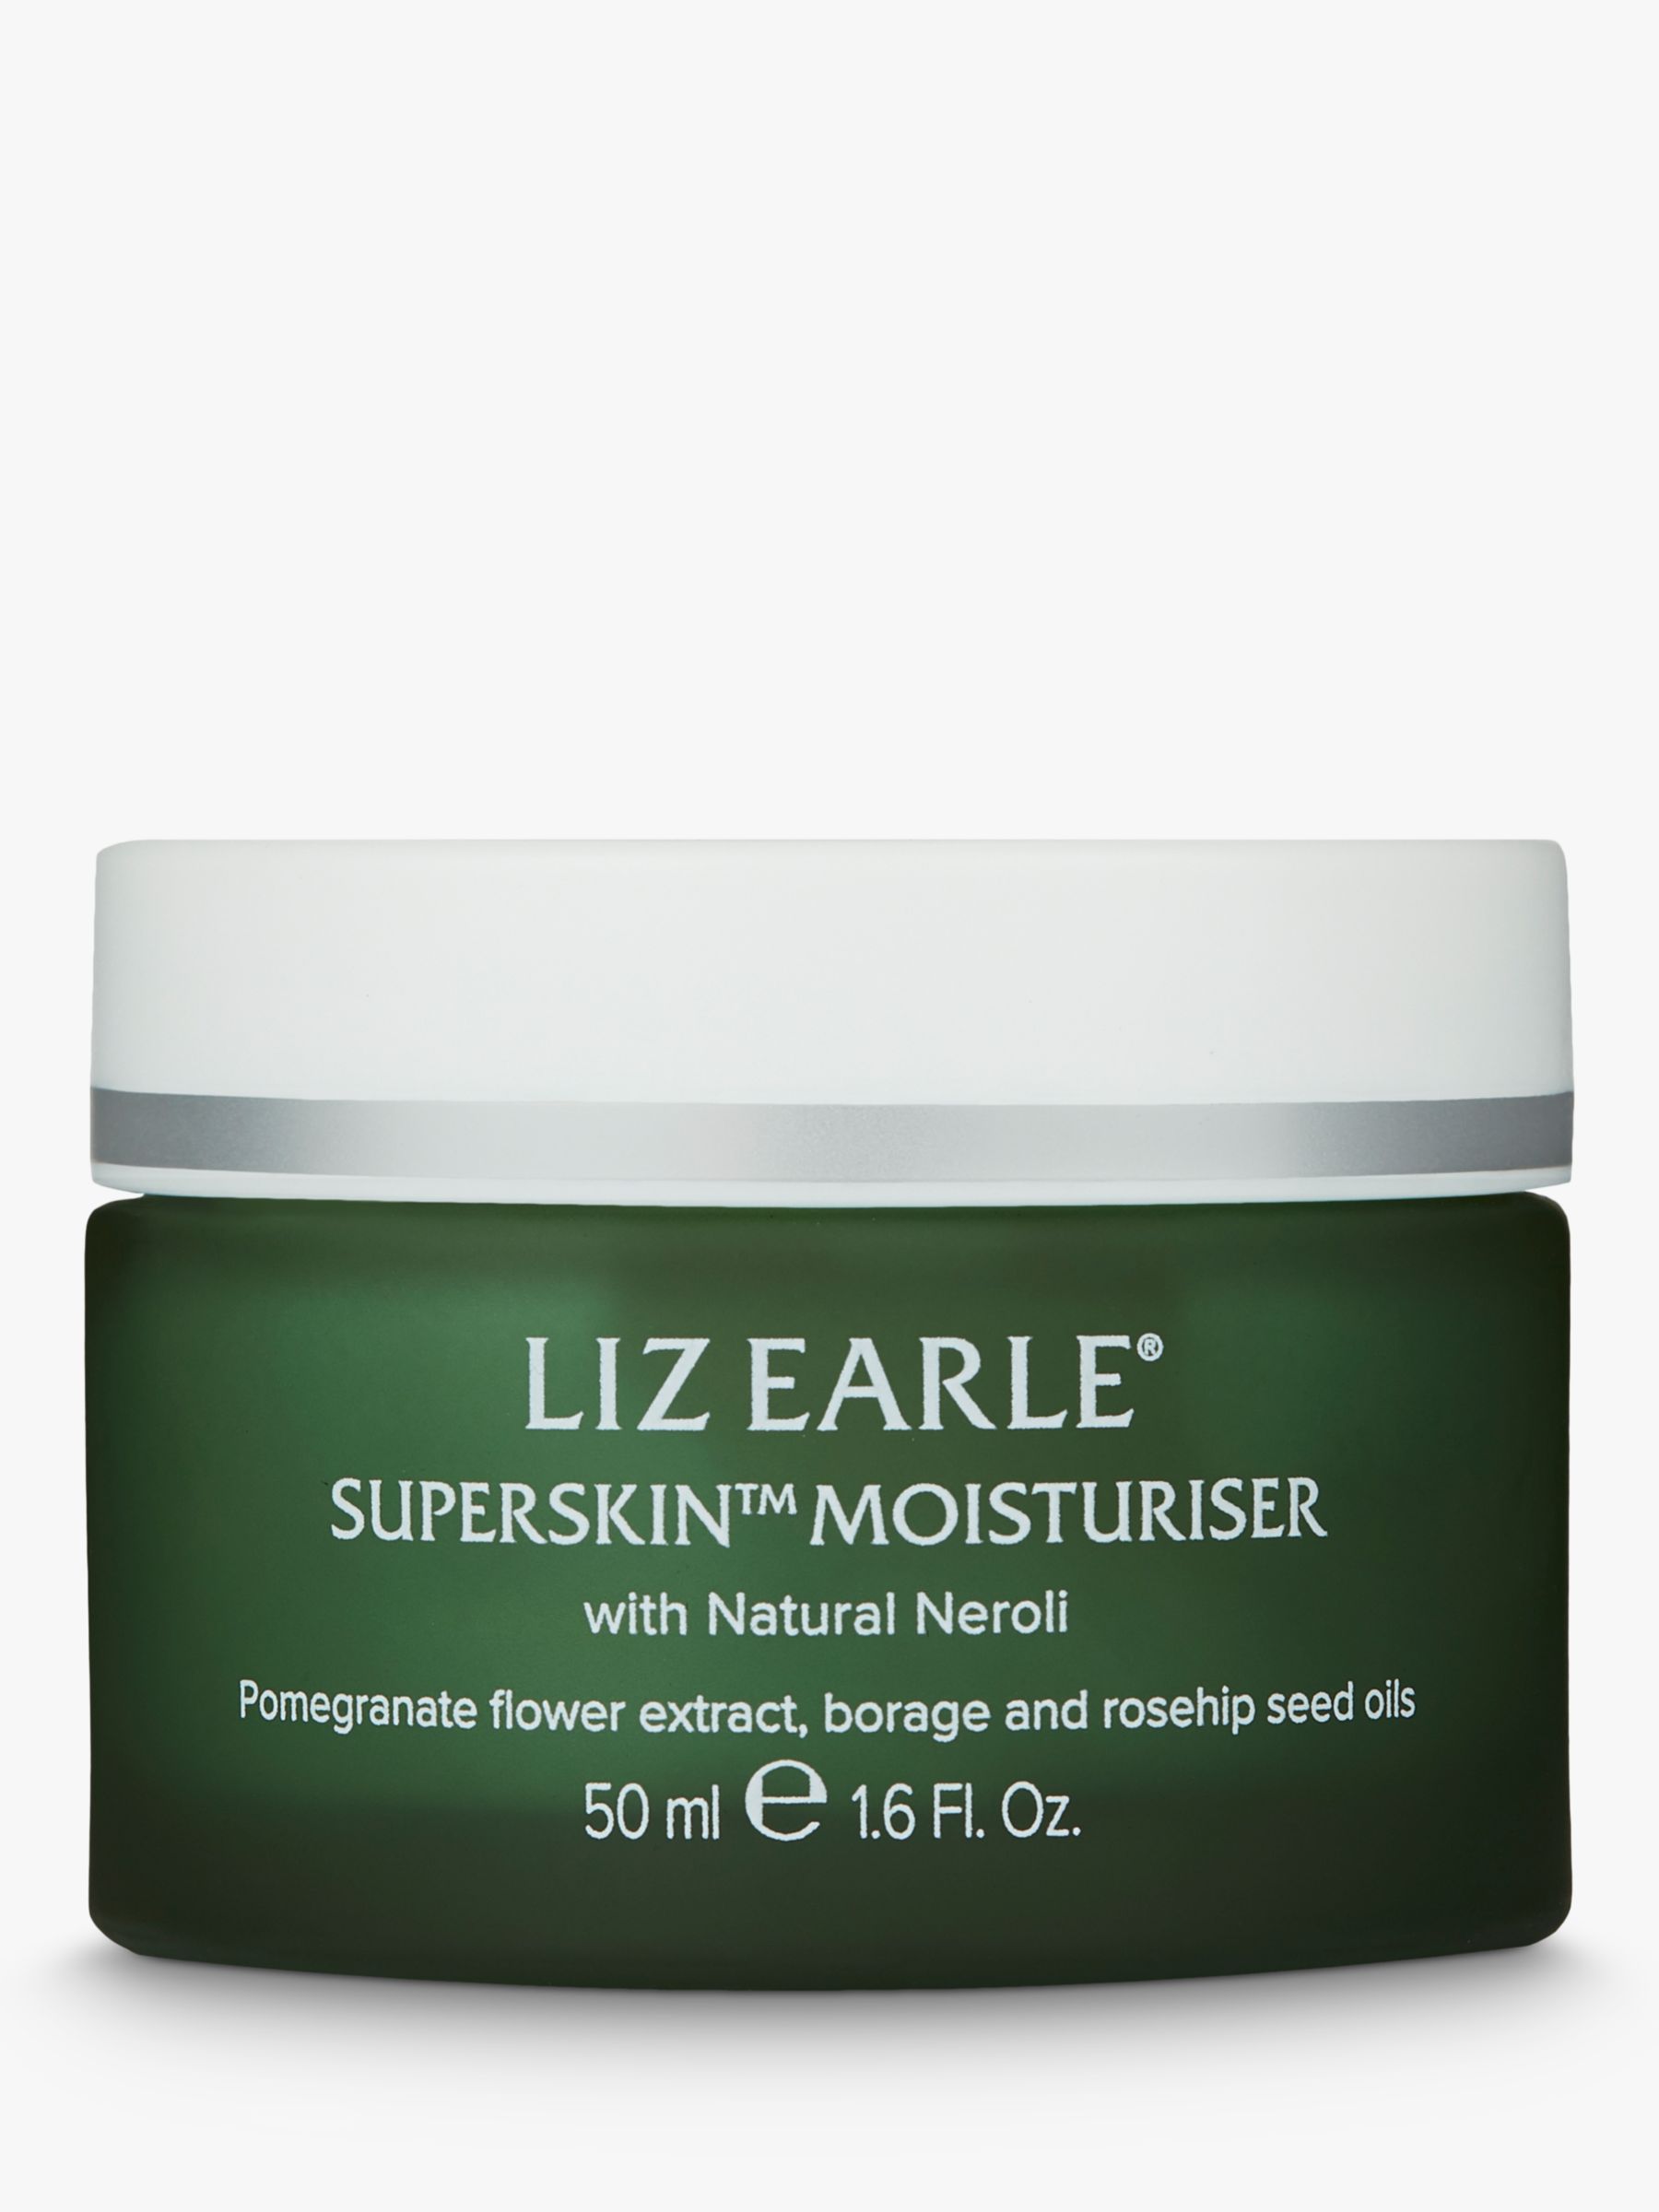 Liz Earle Superskin™ Moisturiser with Natural Neroli Scent, 50ml 1